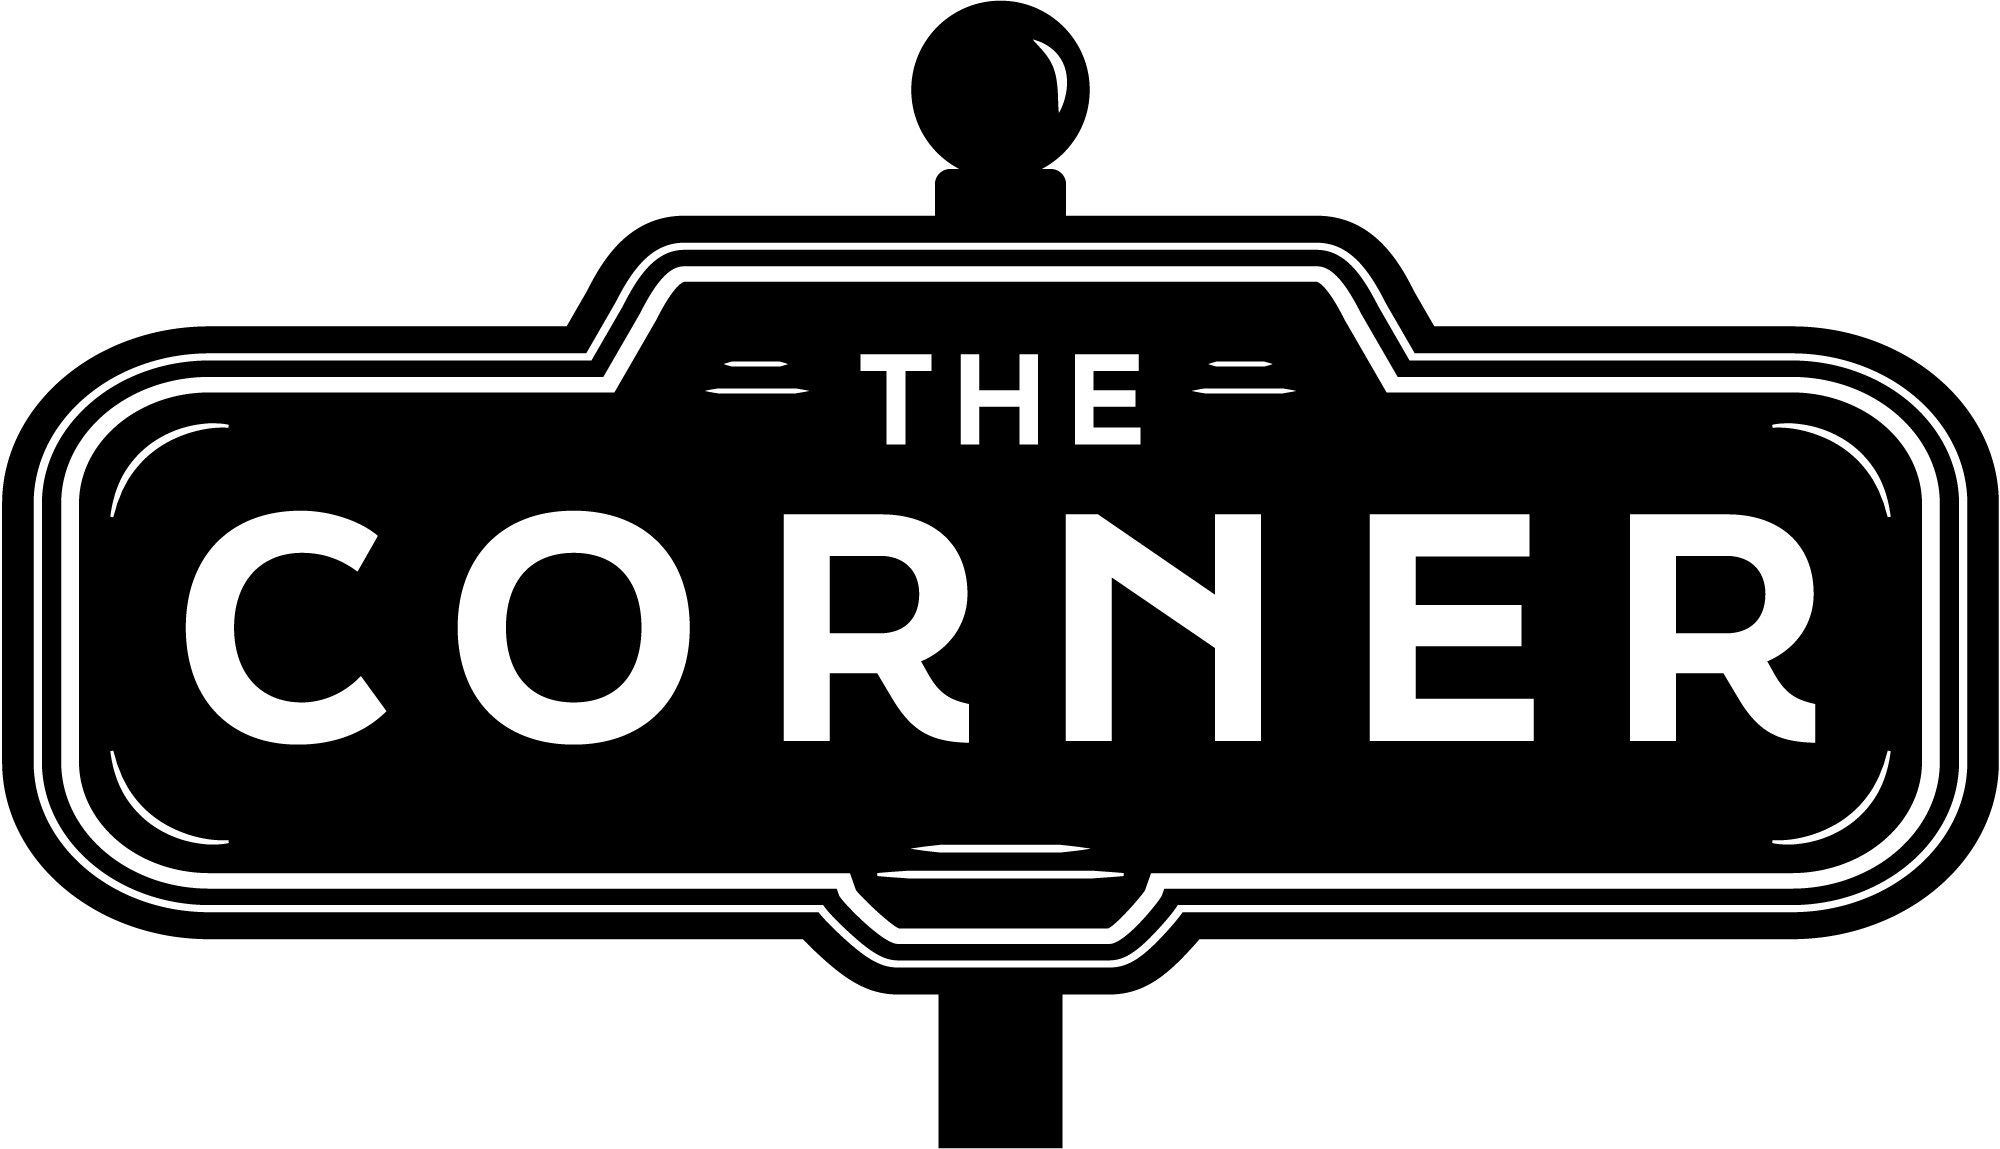 The corner logo